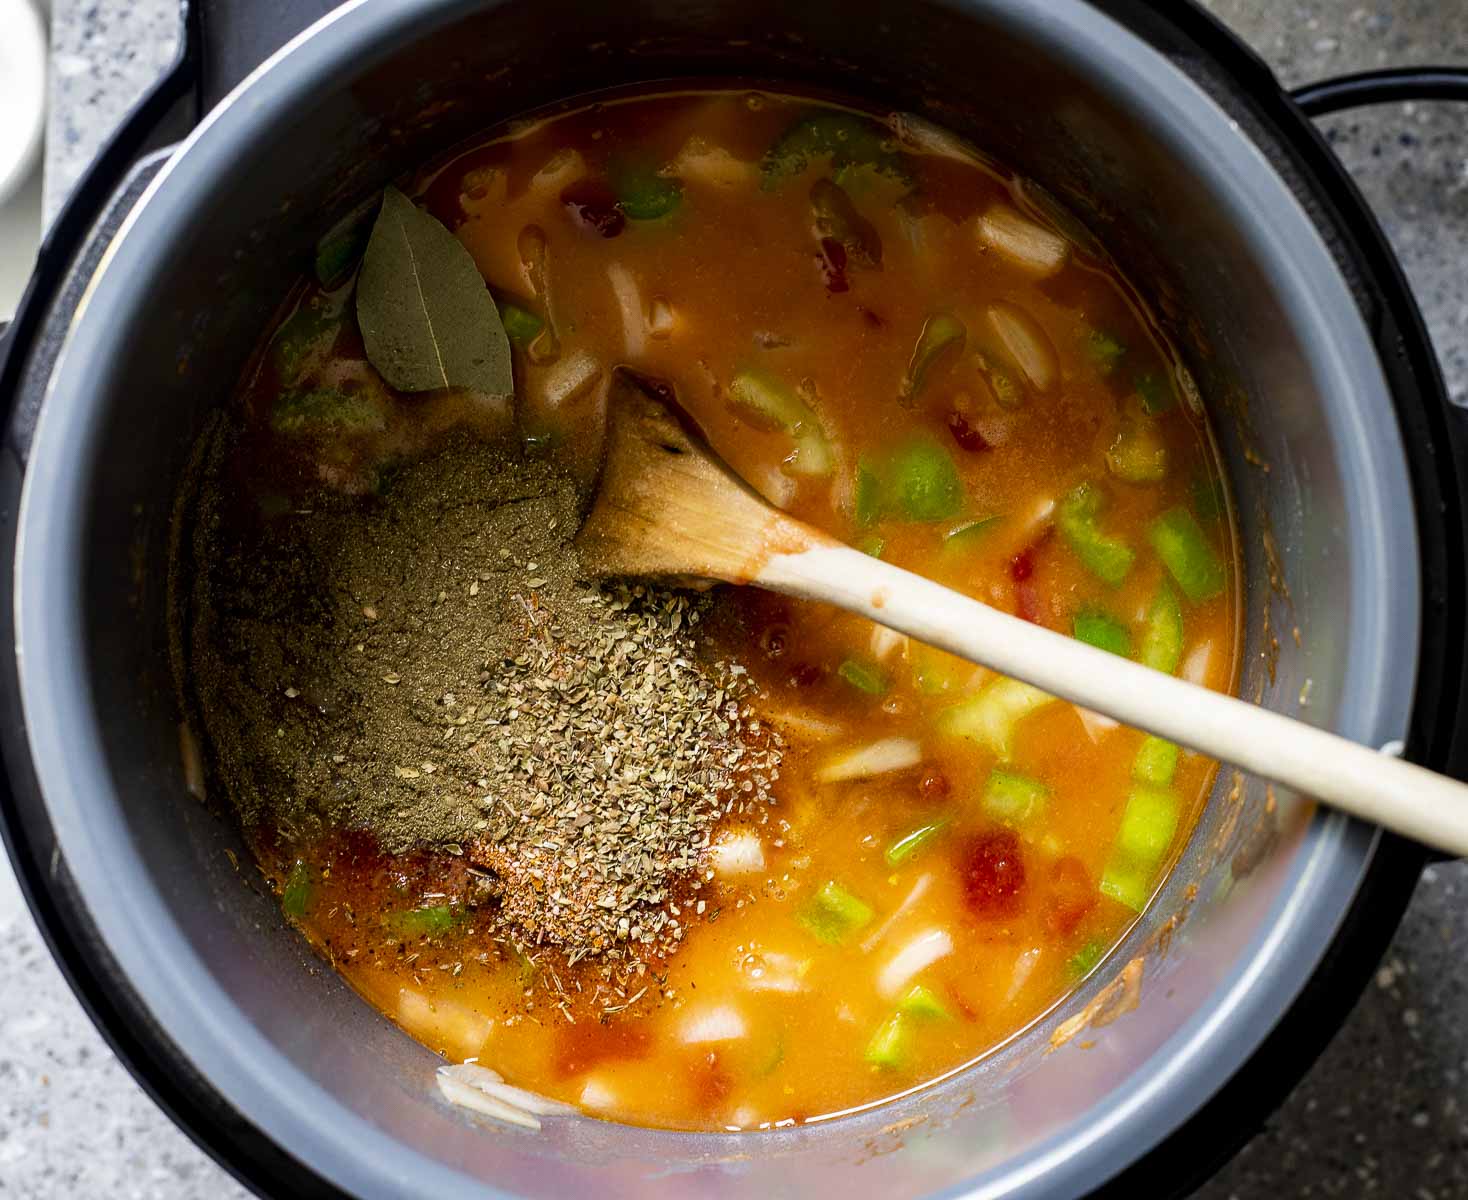 Instant pot gumbo  Easy Cajun Recipes - Upstate Ramblings